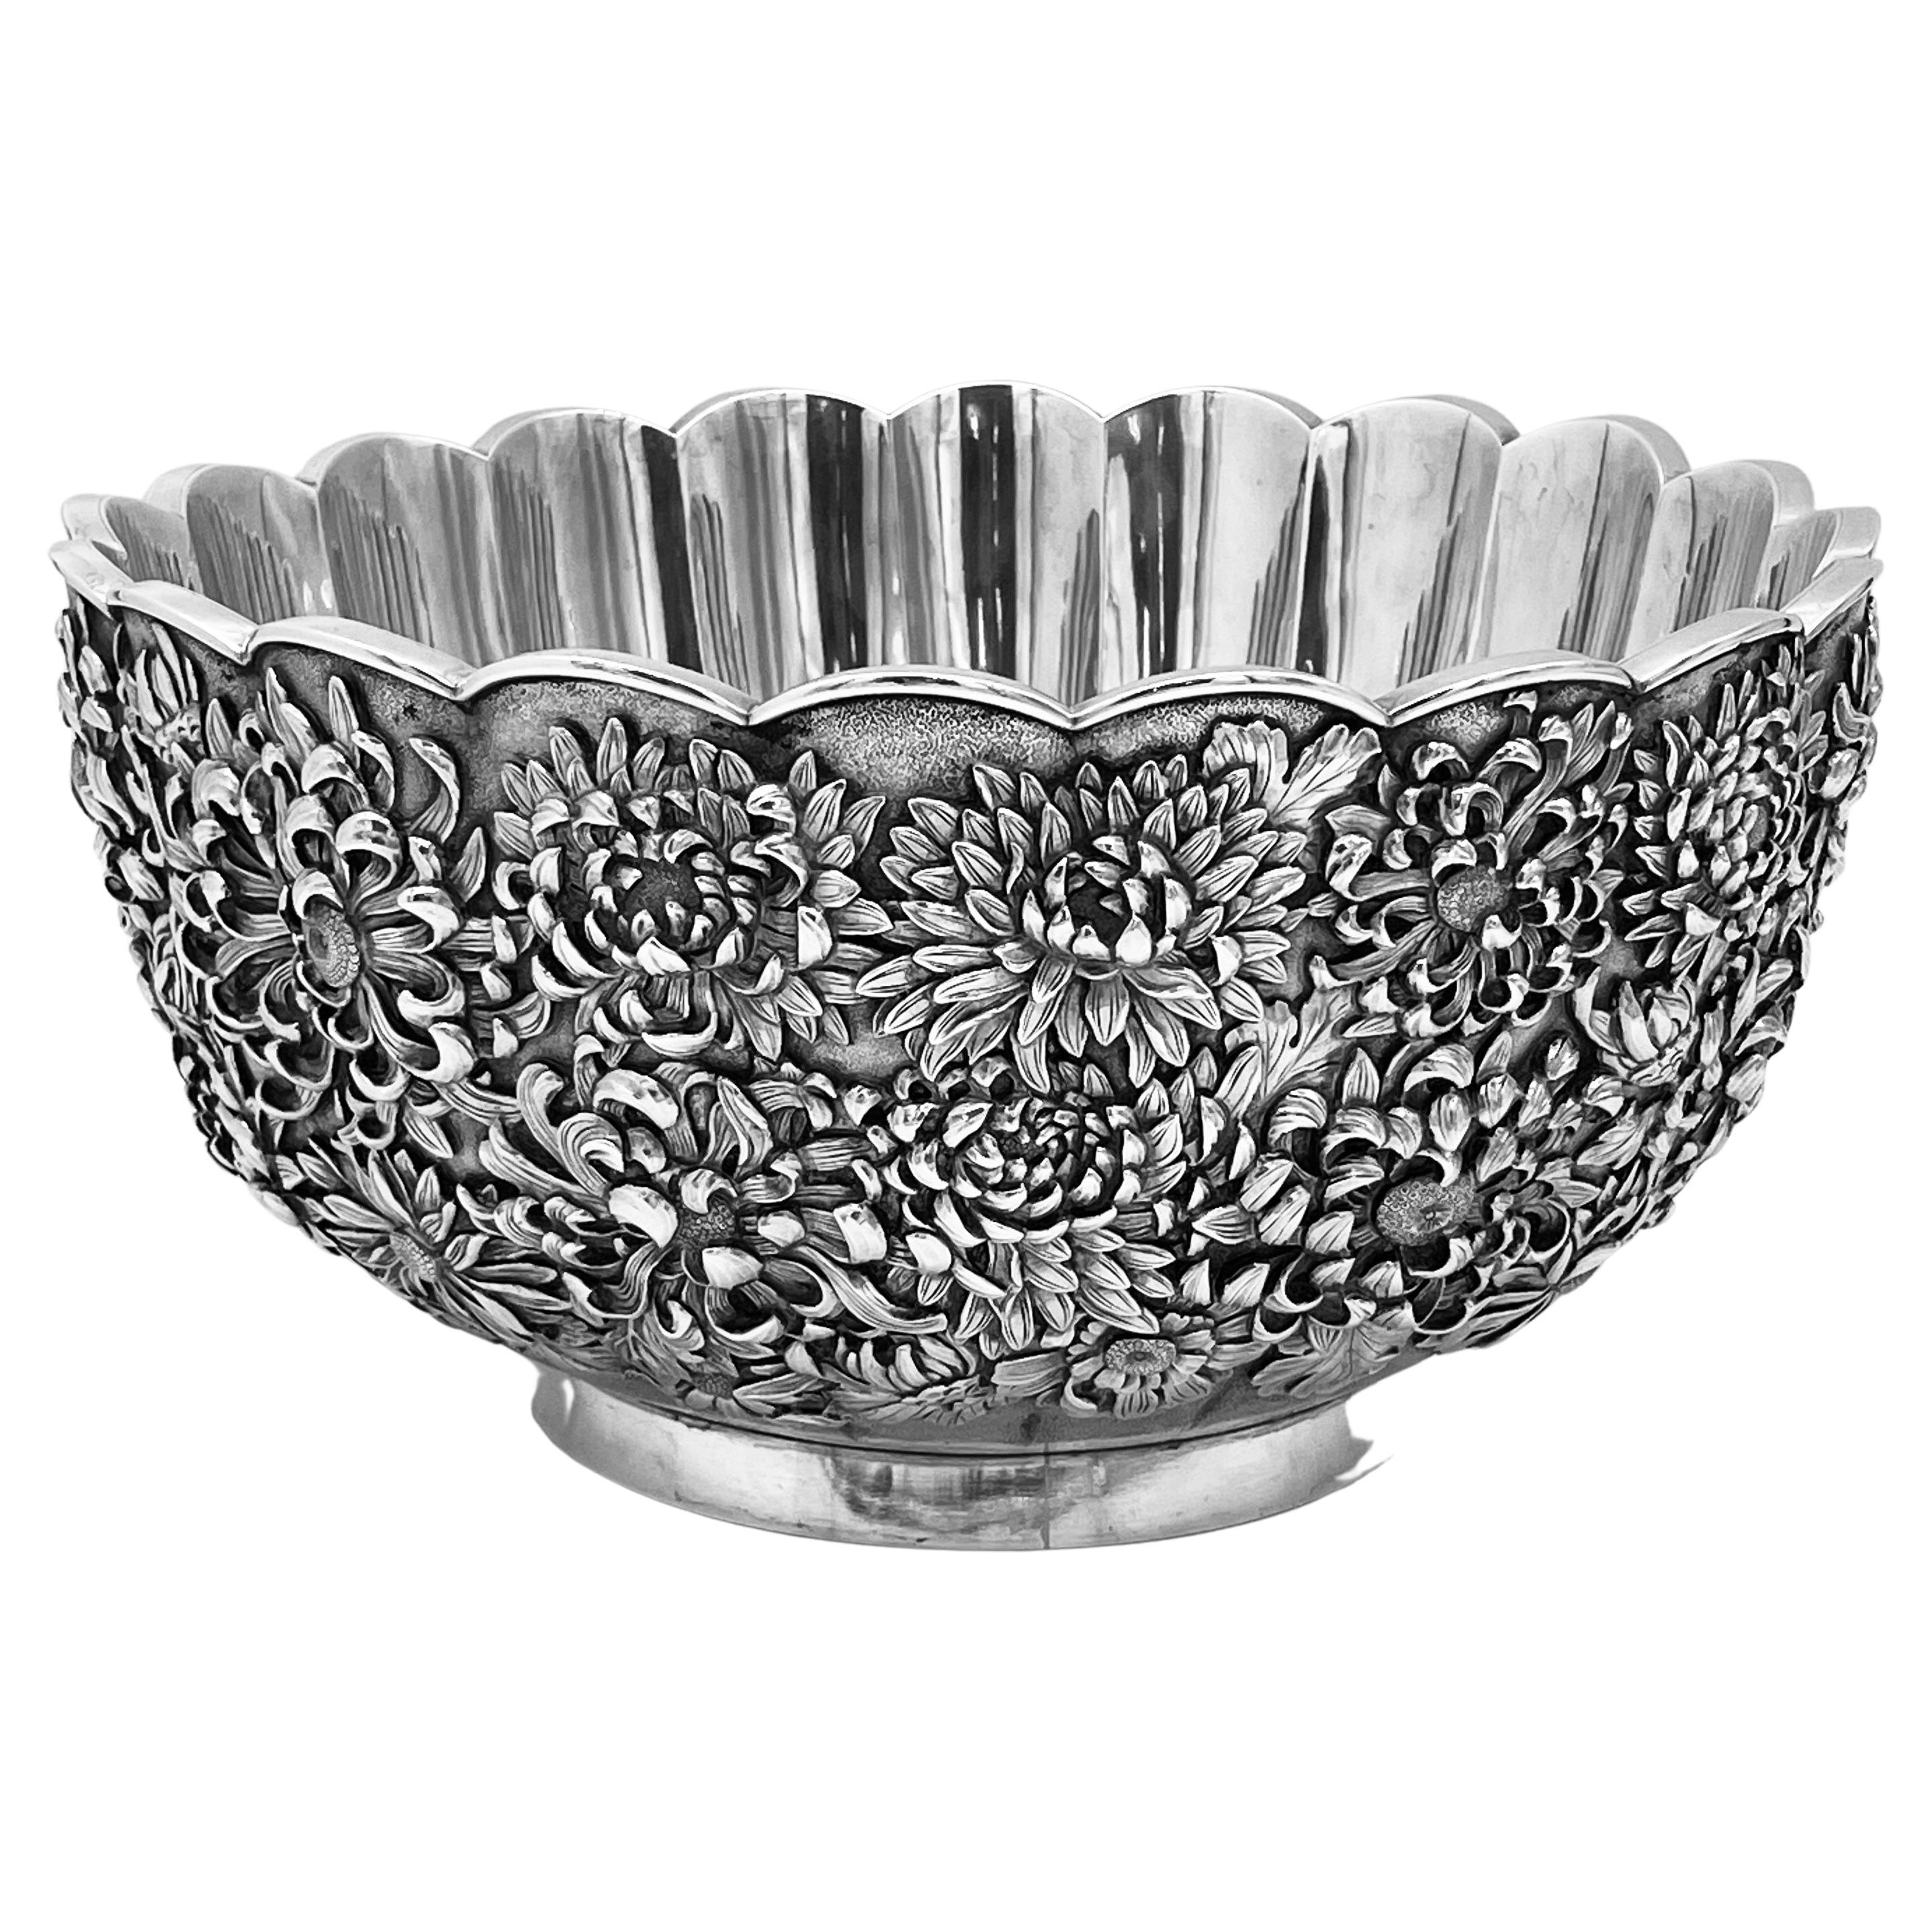 Japanese Silver Bowl with chrysanthemum